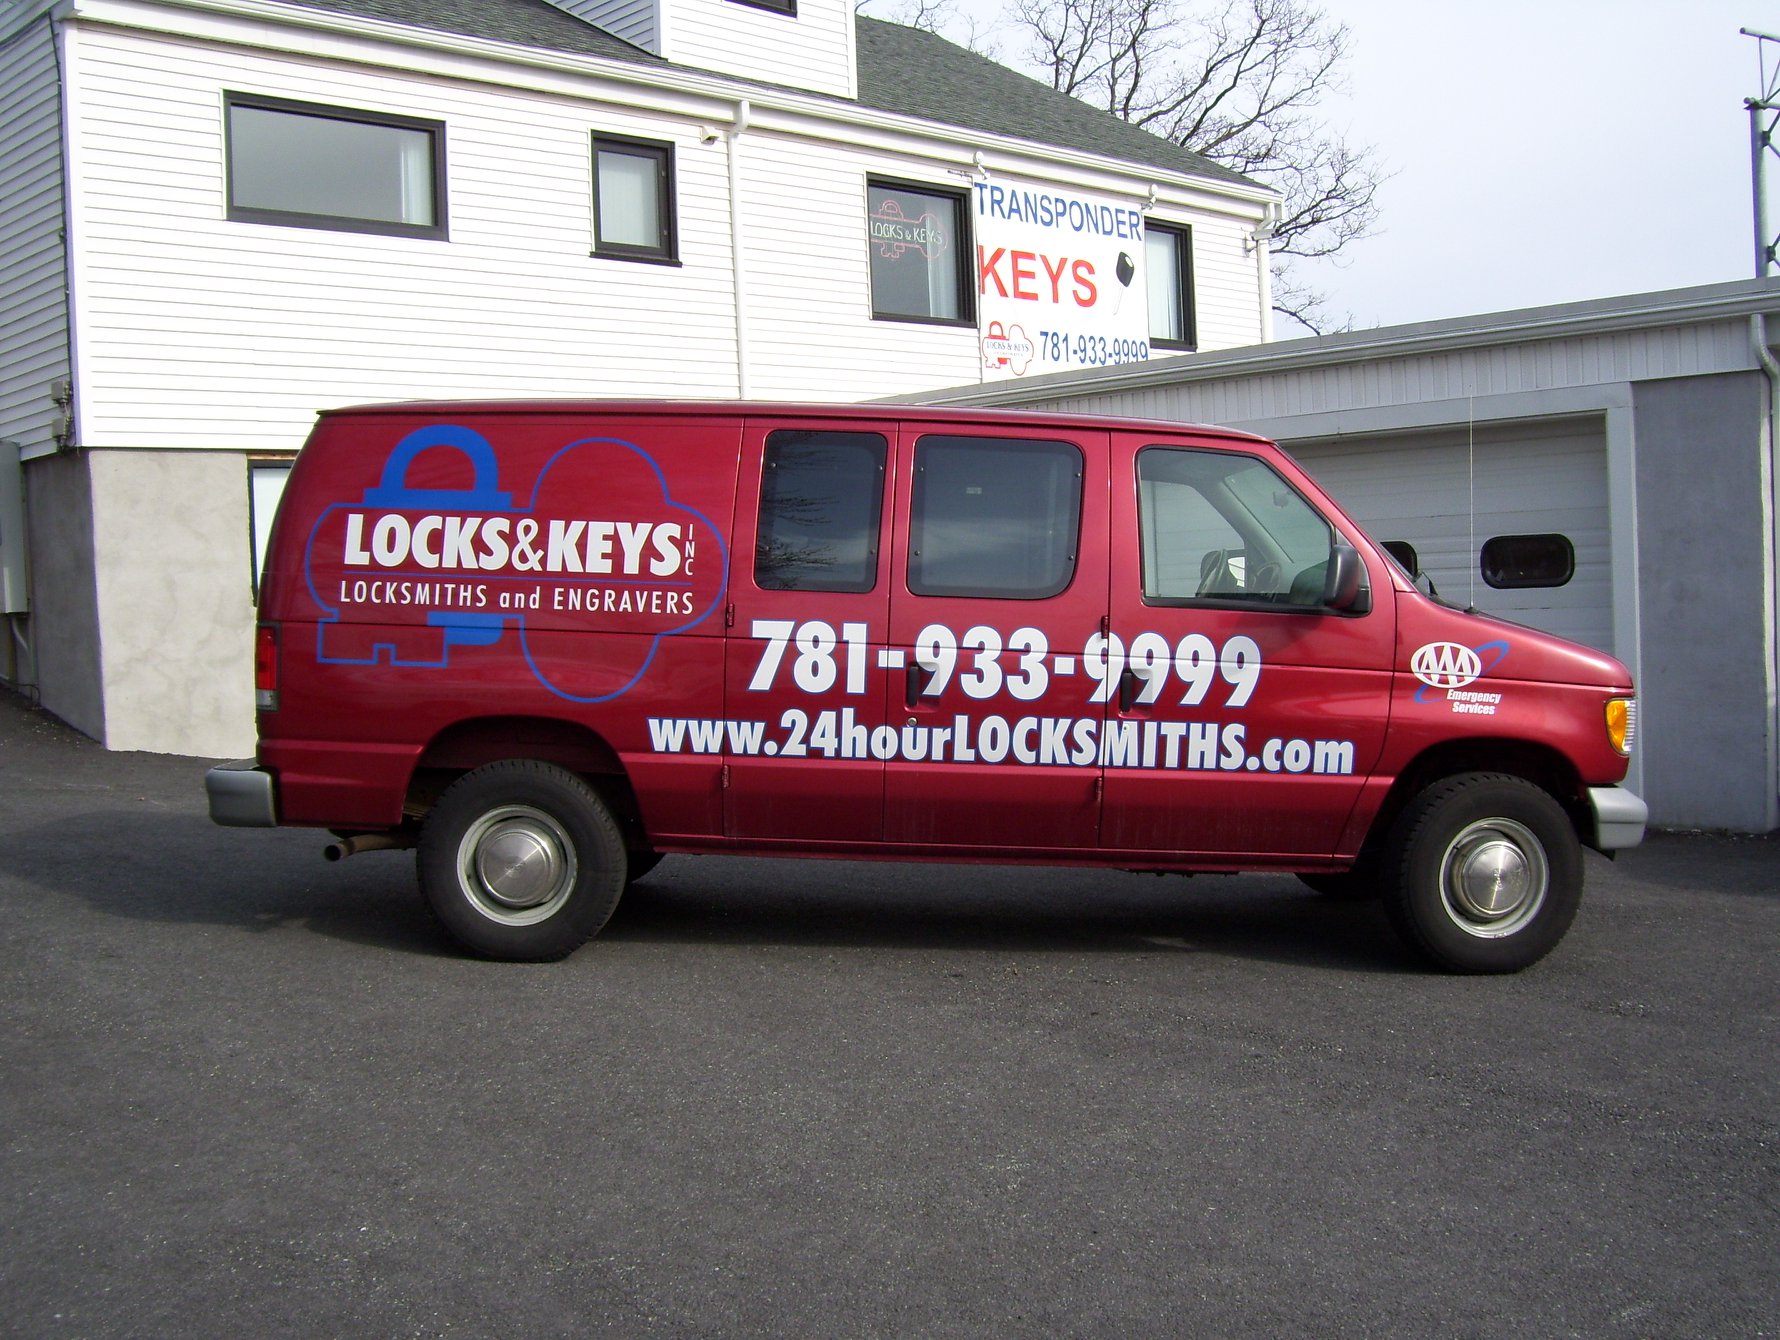 Locks & Keys Inc. - Emergency Services - Billerica MA locksmith